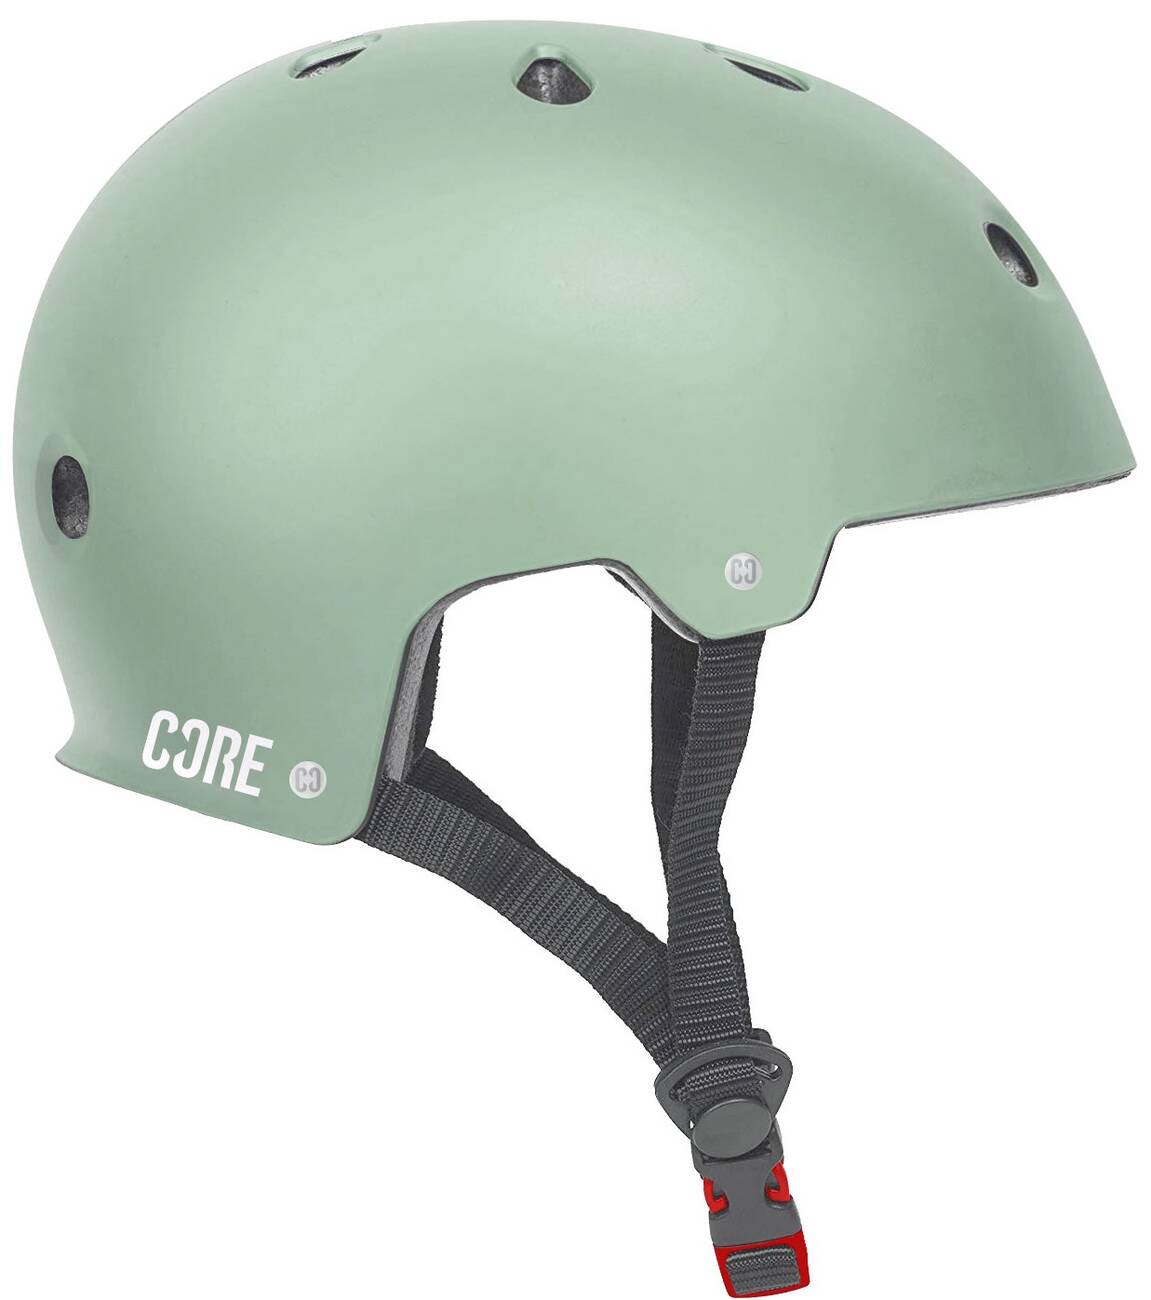 CORE Action Sports Helmet - Army Green Khaki